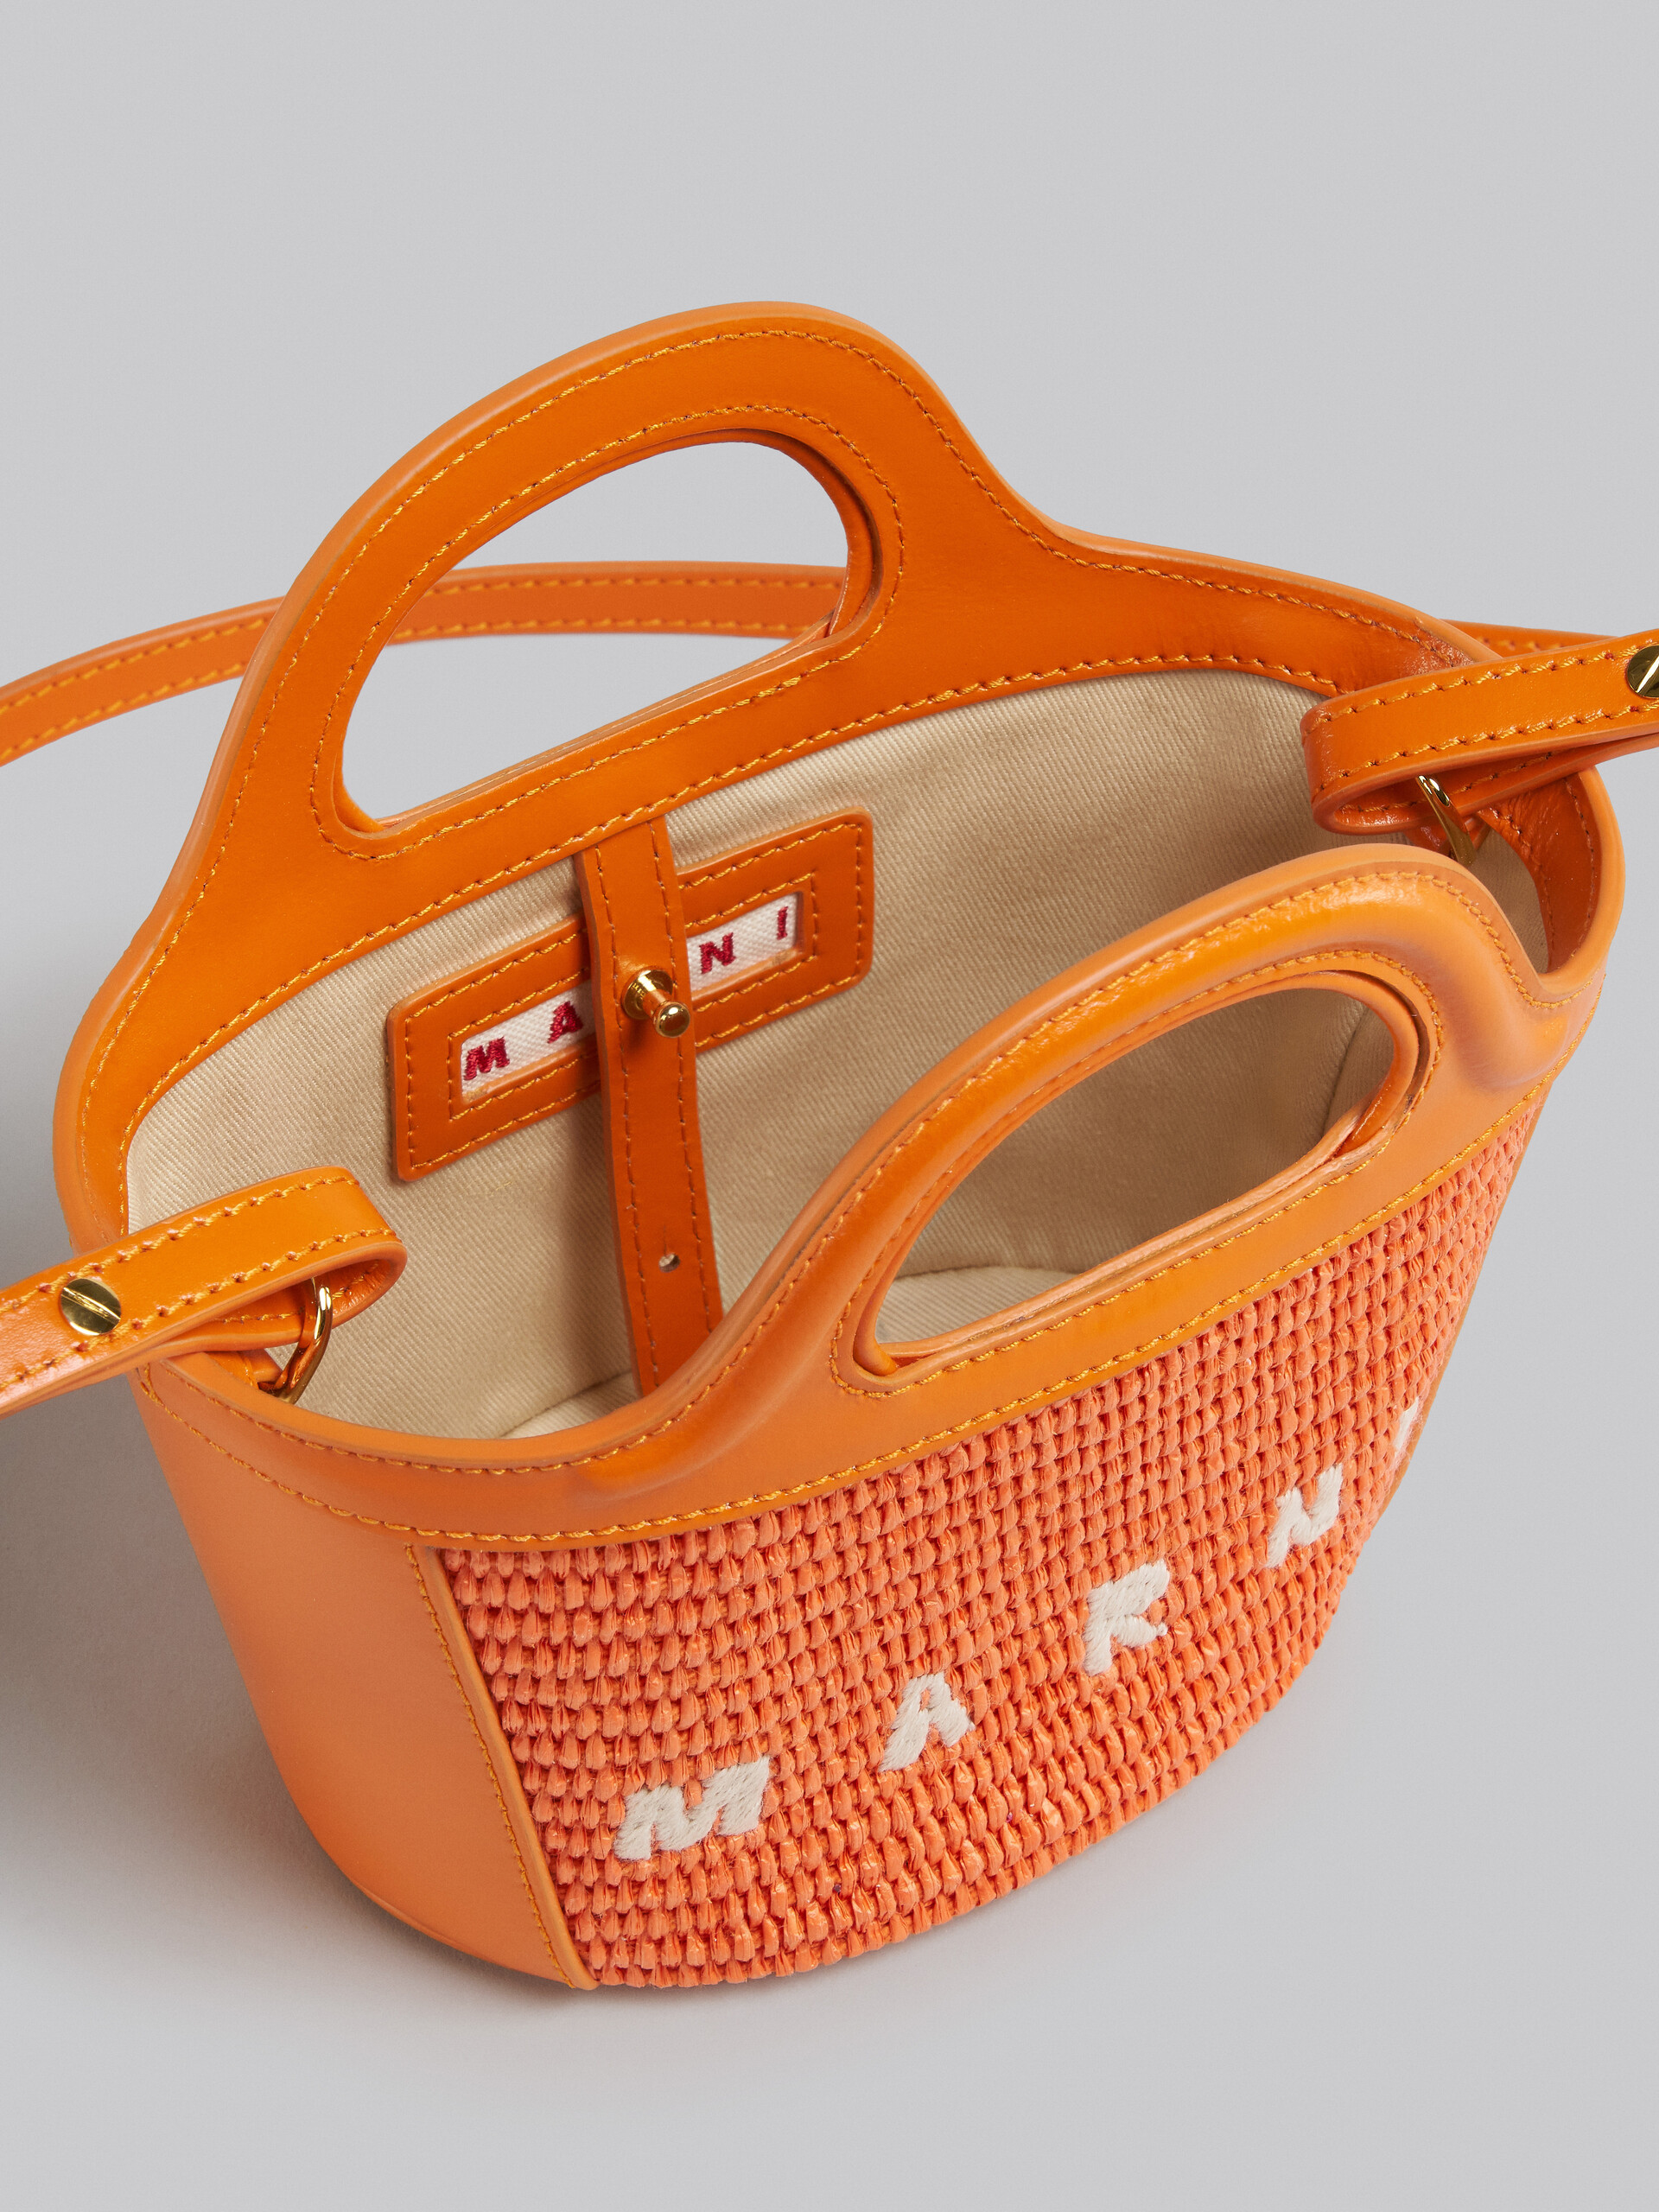 Tropicalia Micro Bag in orange leather and raffia - Handbags - Image 4